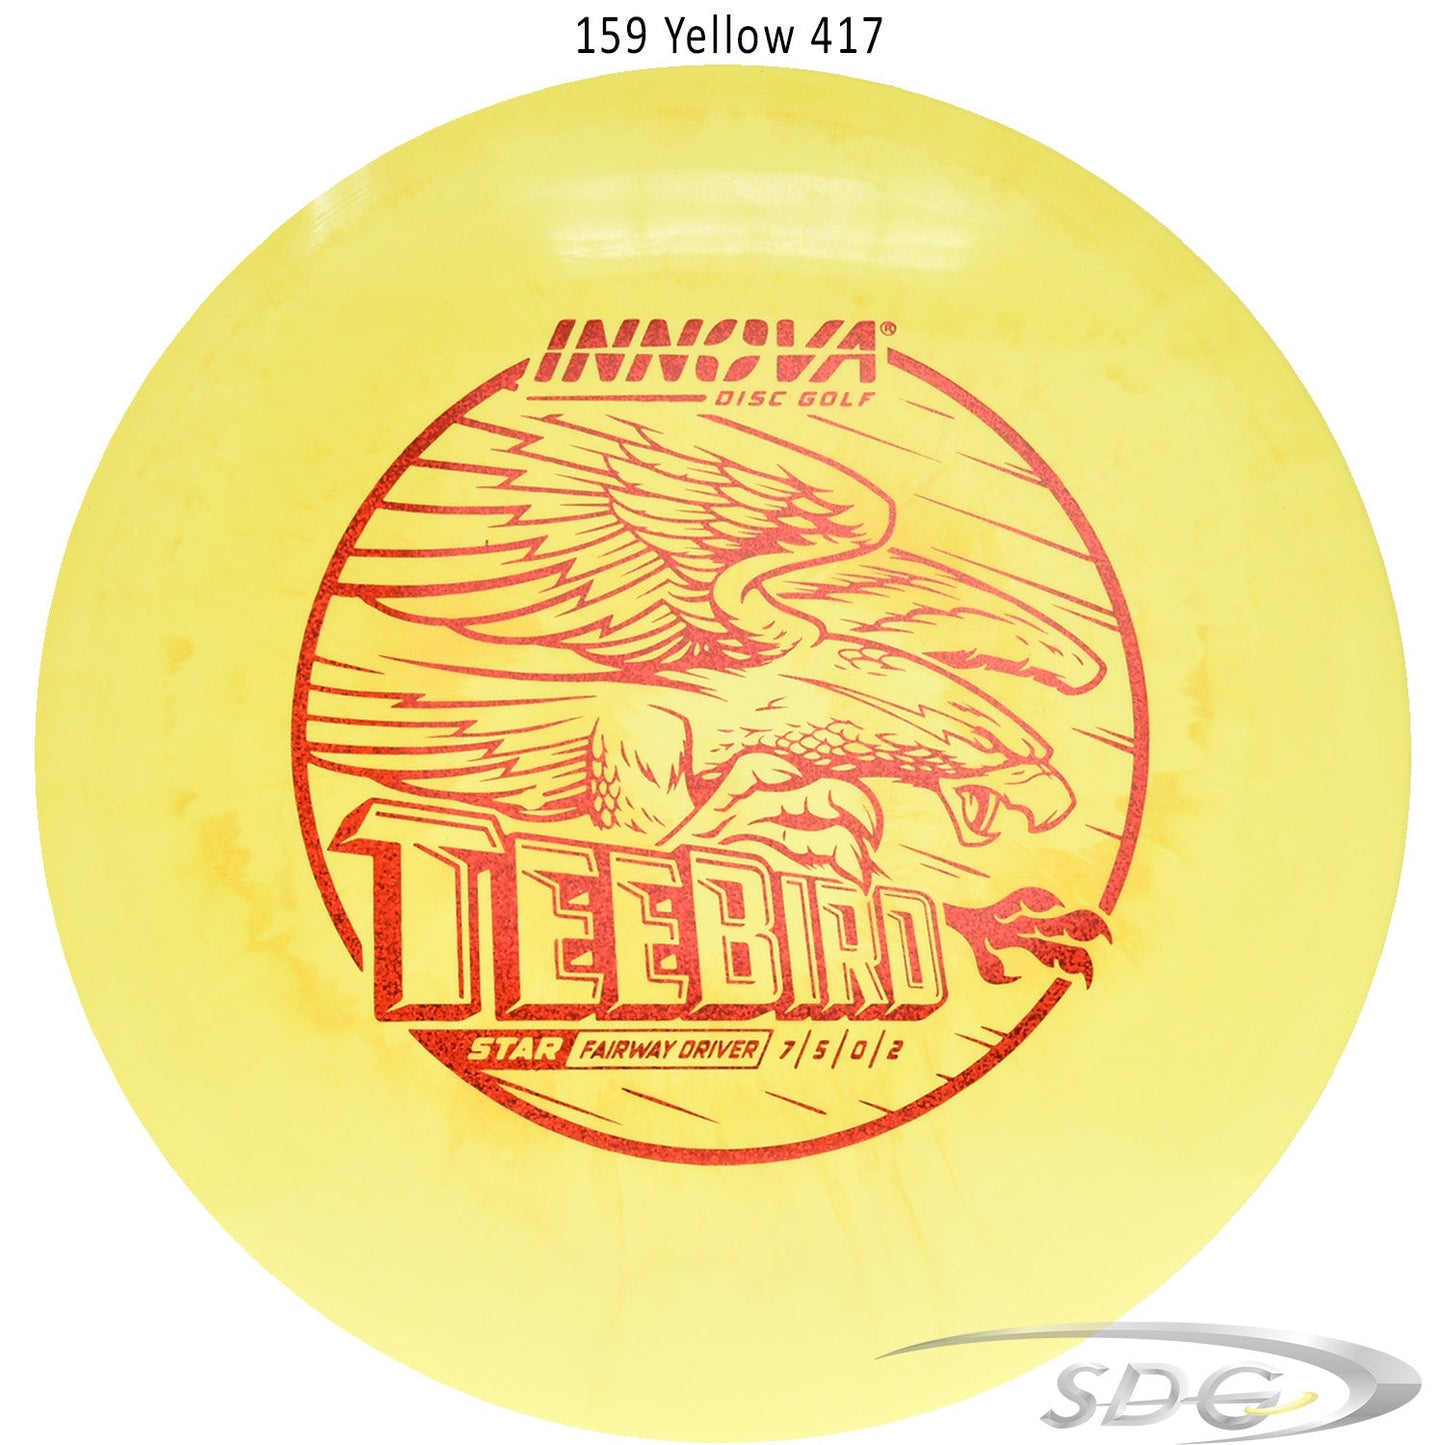 innova-star-teebird-disc-golf-fairway-driver 159 Yellow 417 